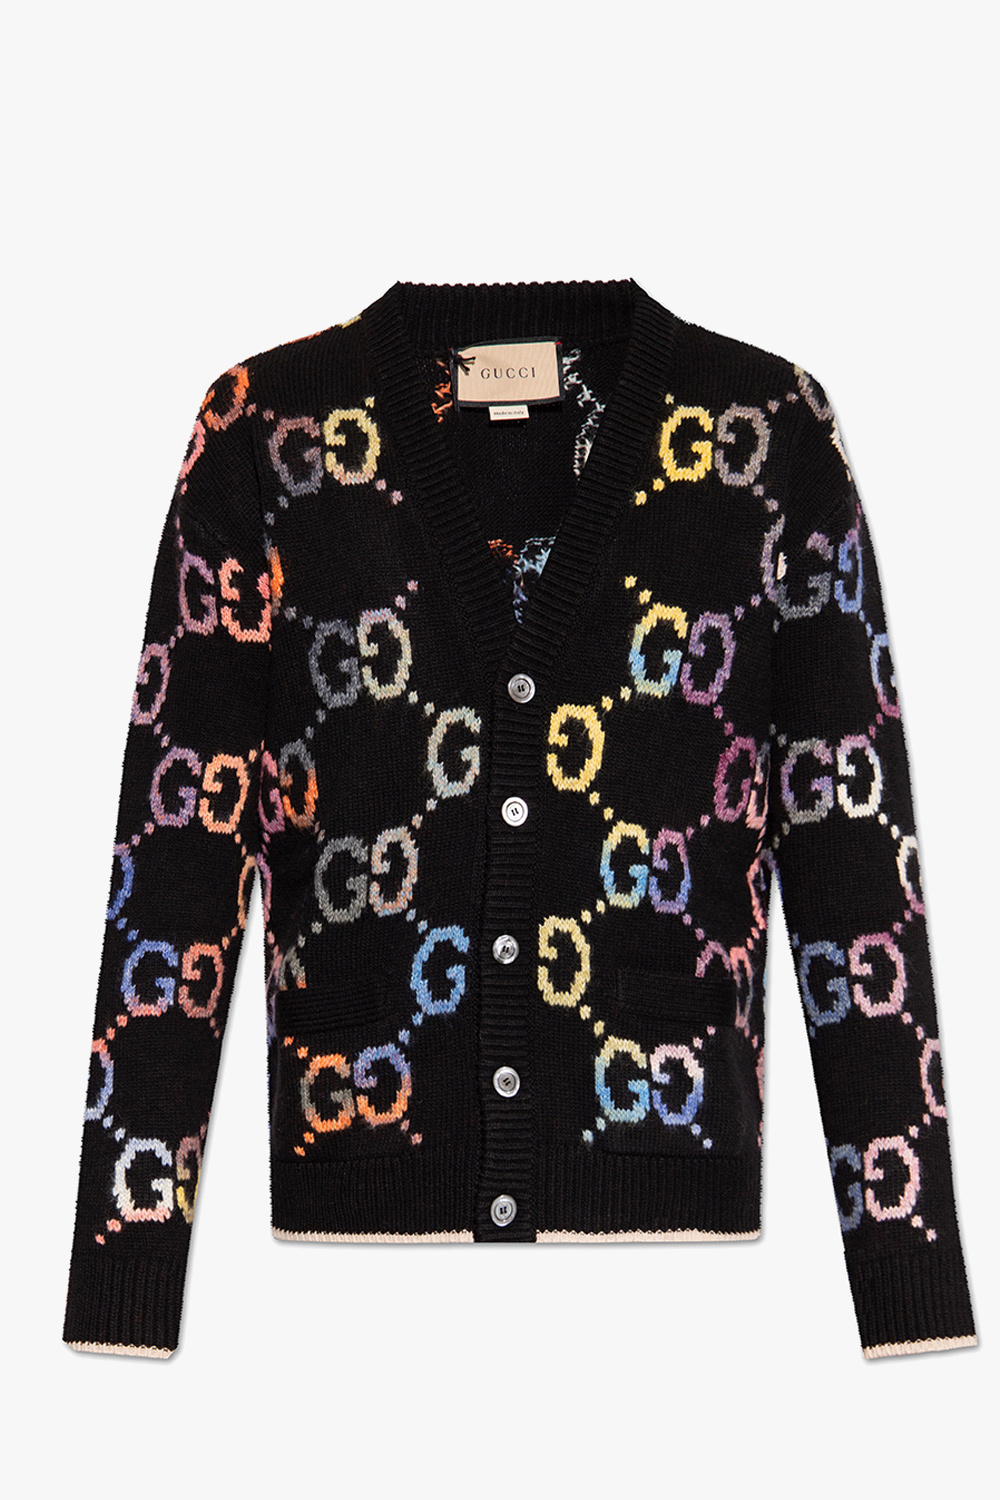 Louis Vuitton Monogram relief gathered shirt - Vitkac shop online